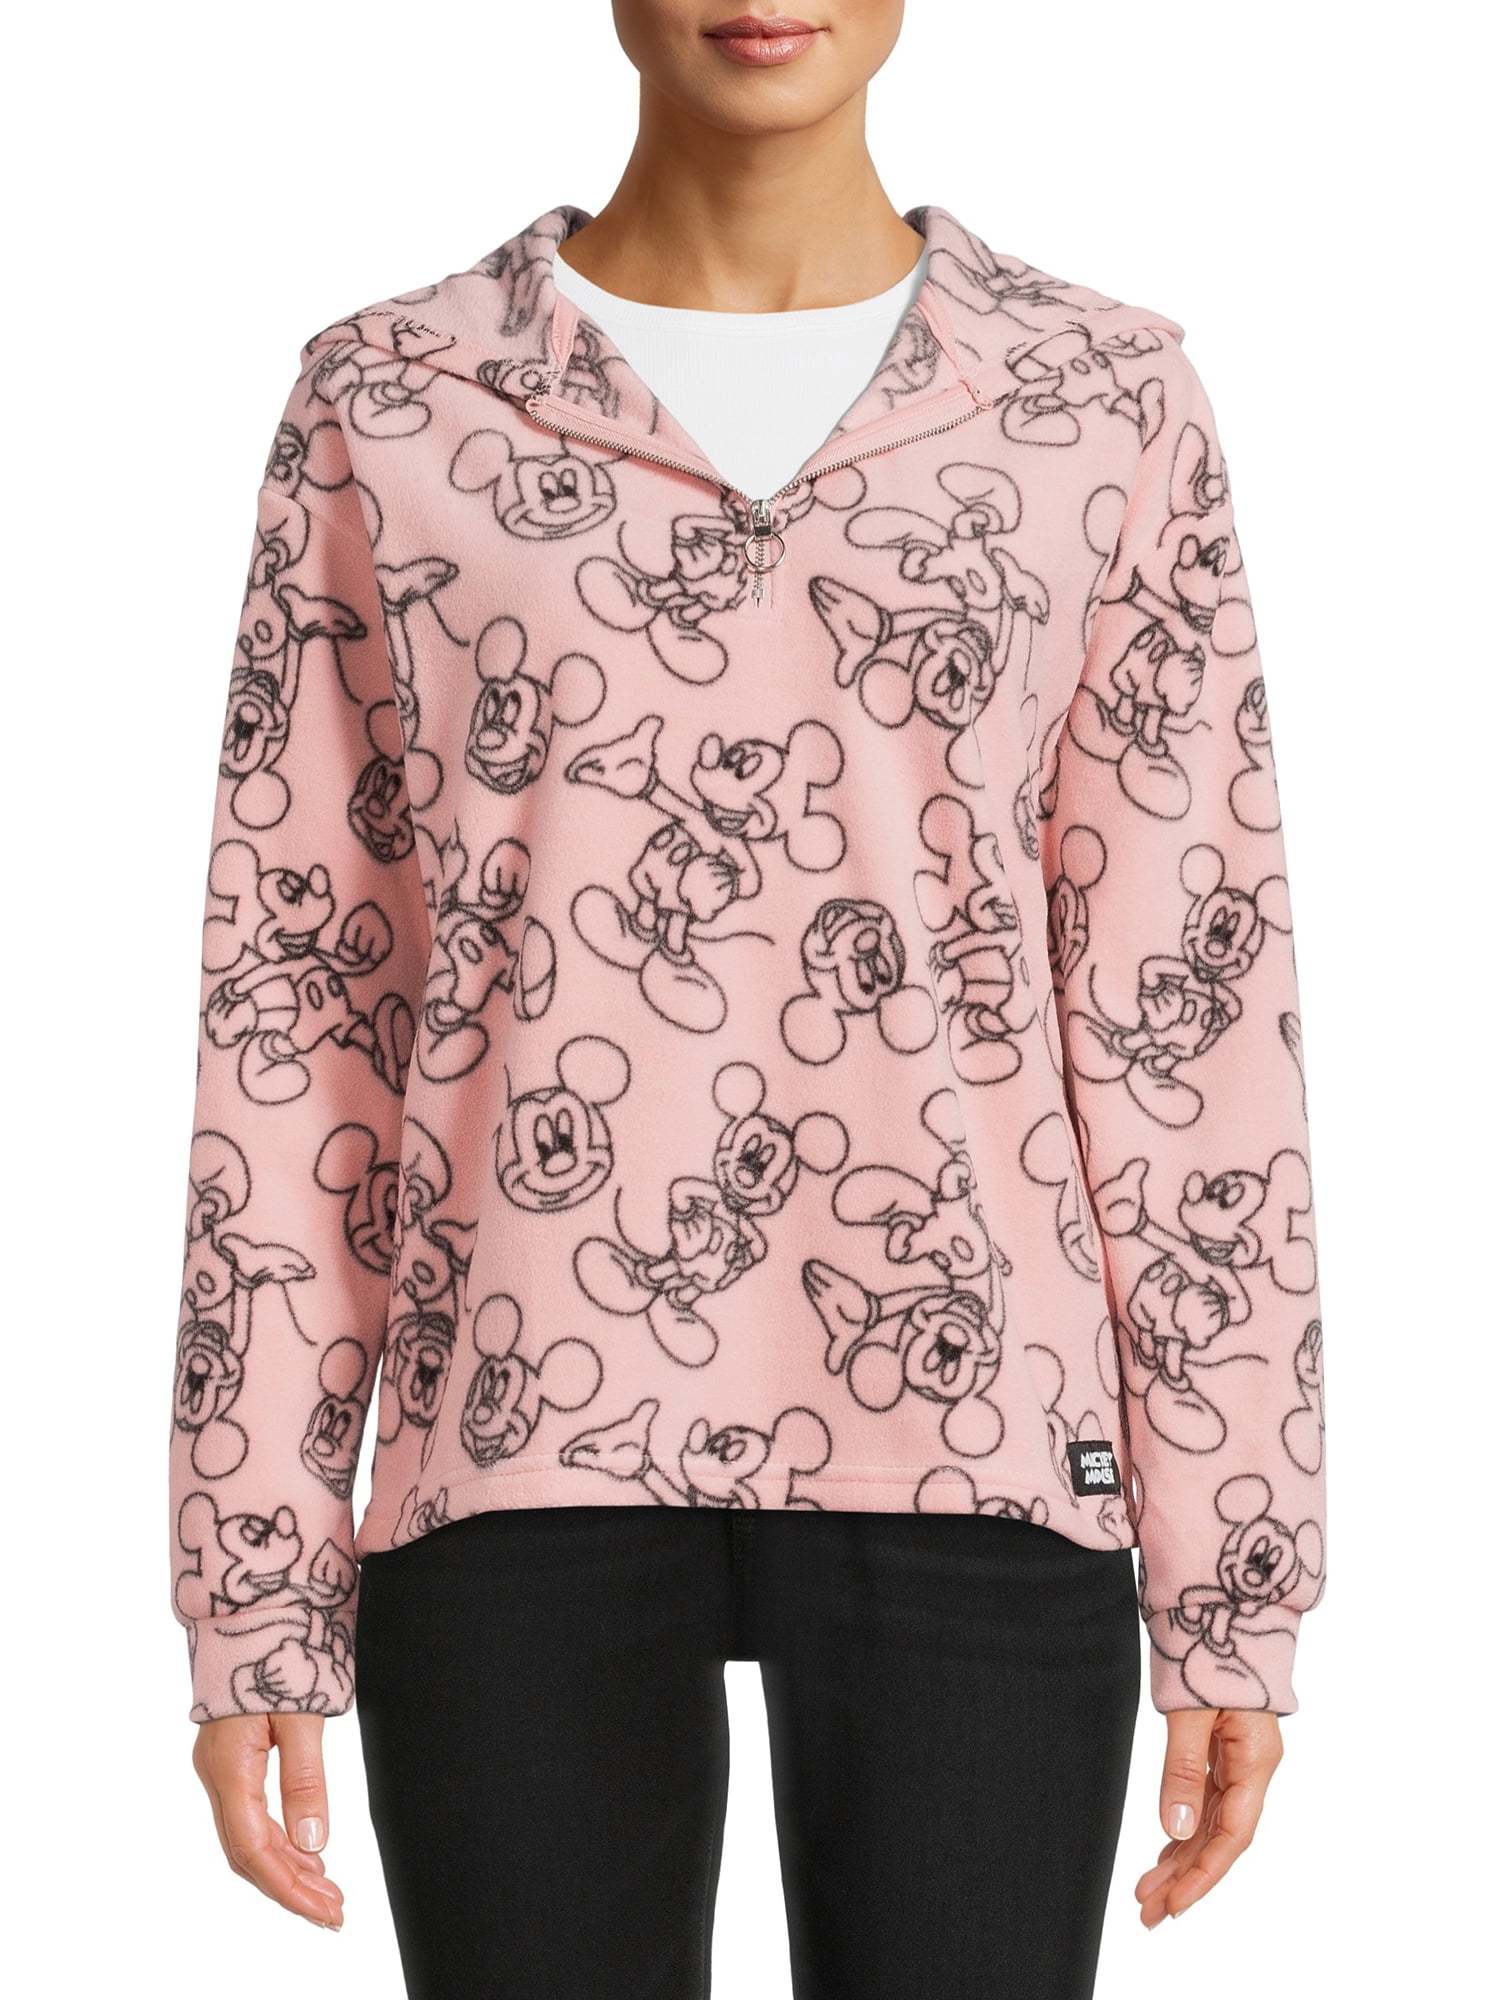 Disney Mickey Mouse Juniors' Allover Print Plush Fleece Sweatshirt